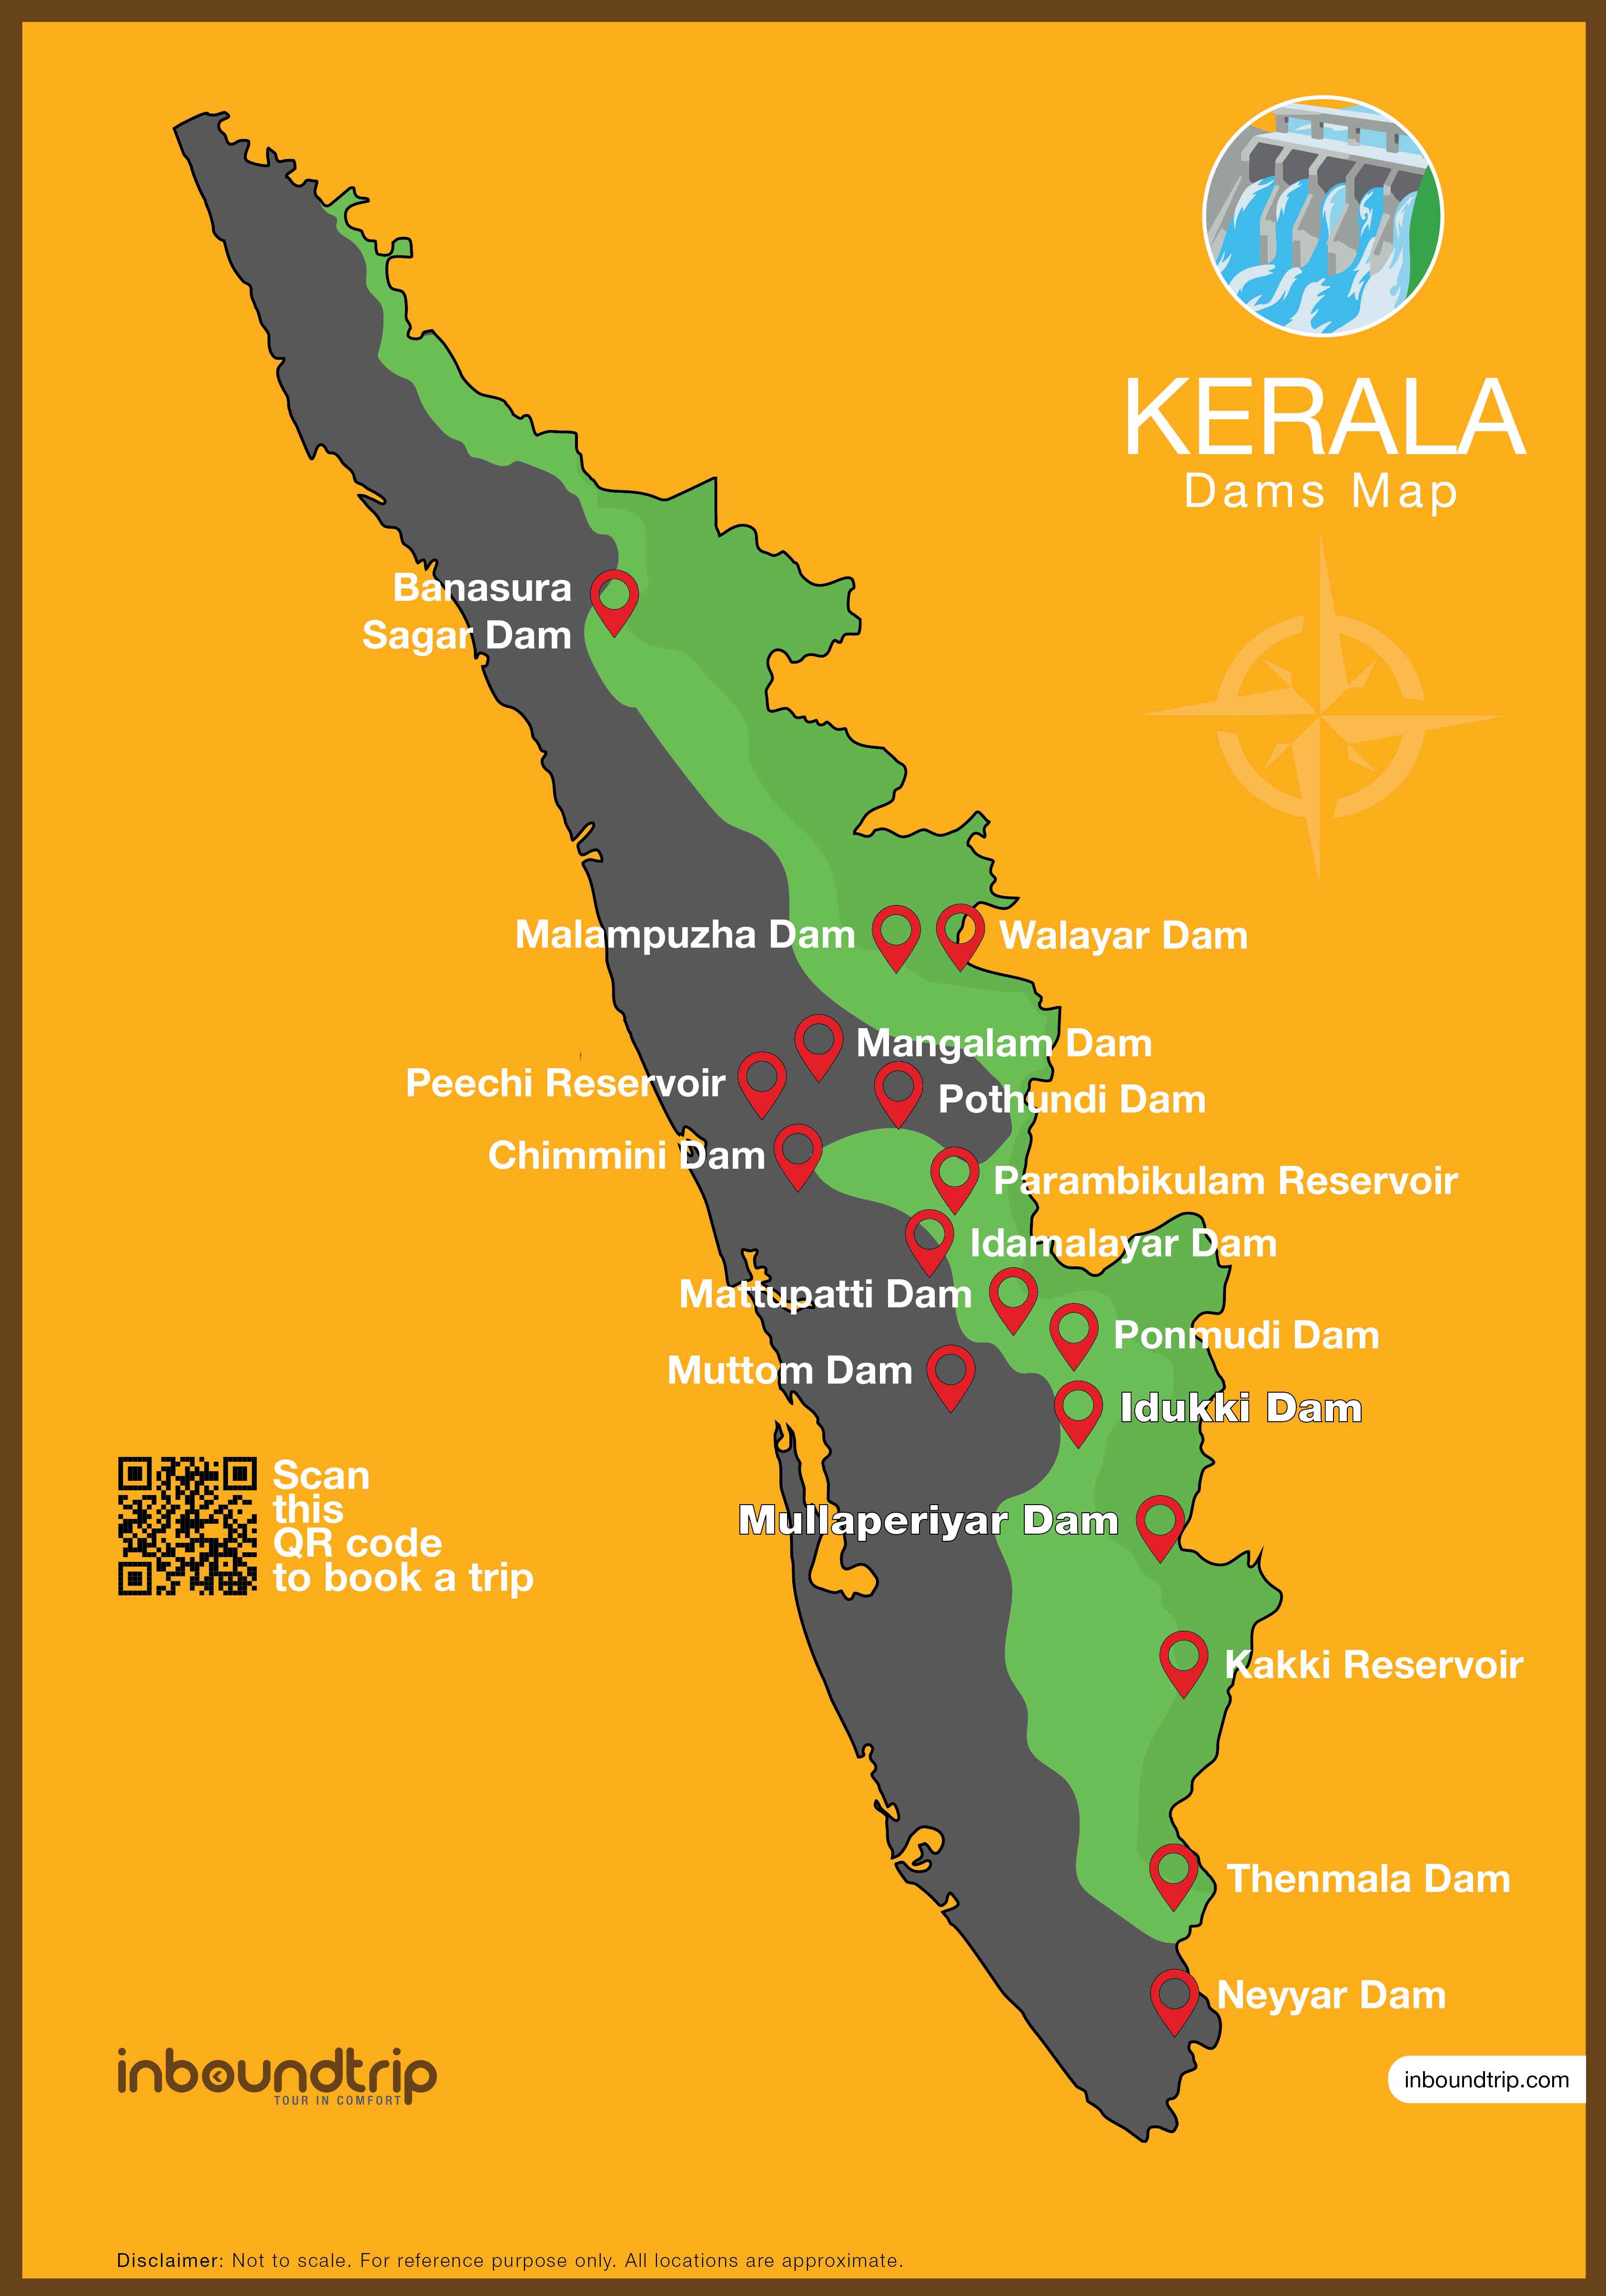 Kerala Dams Map Kerala Taxi Tour Experiences Guides And Tips